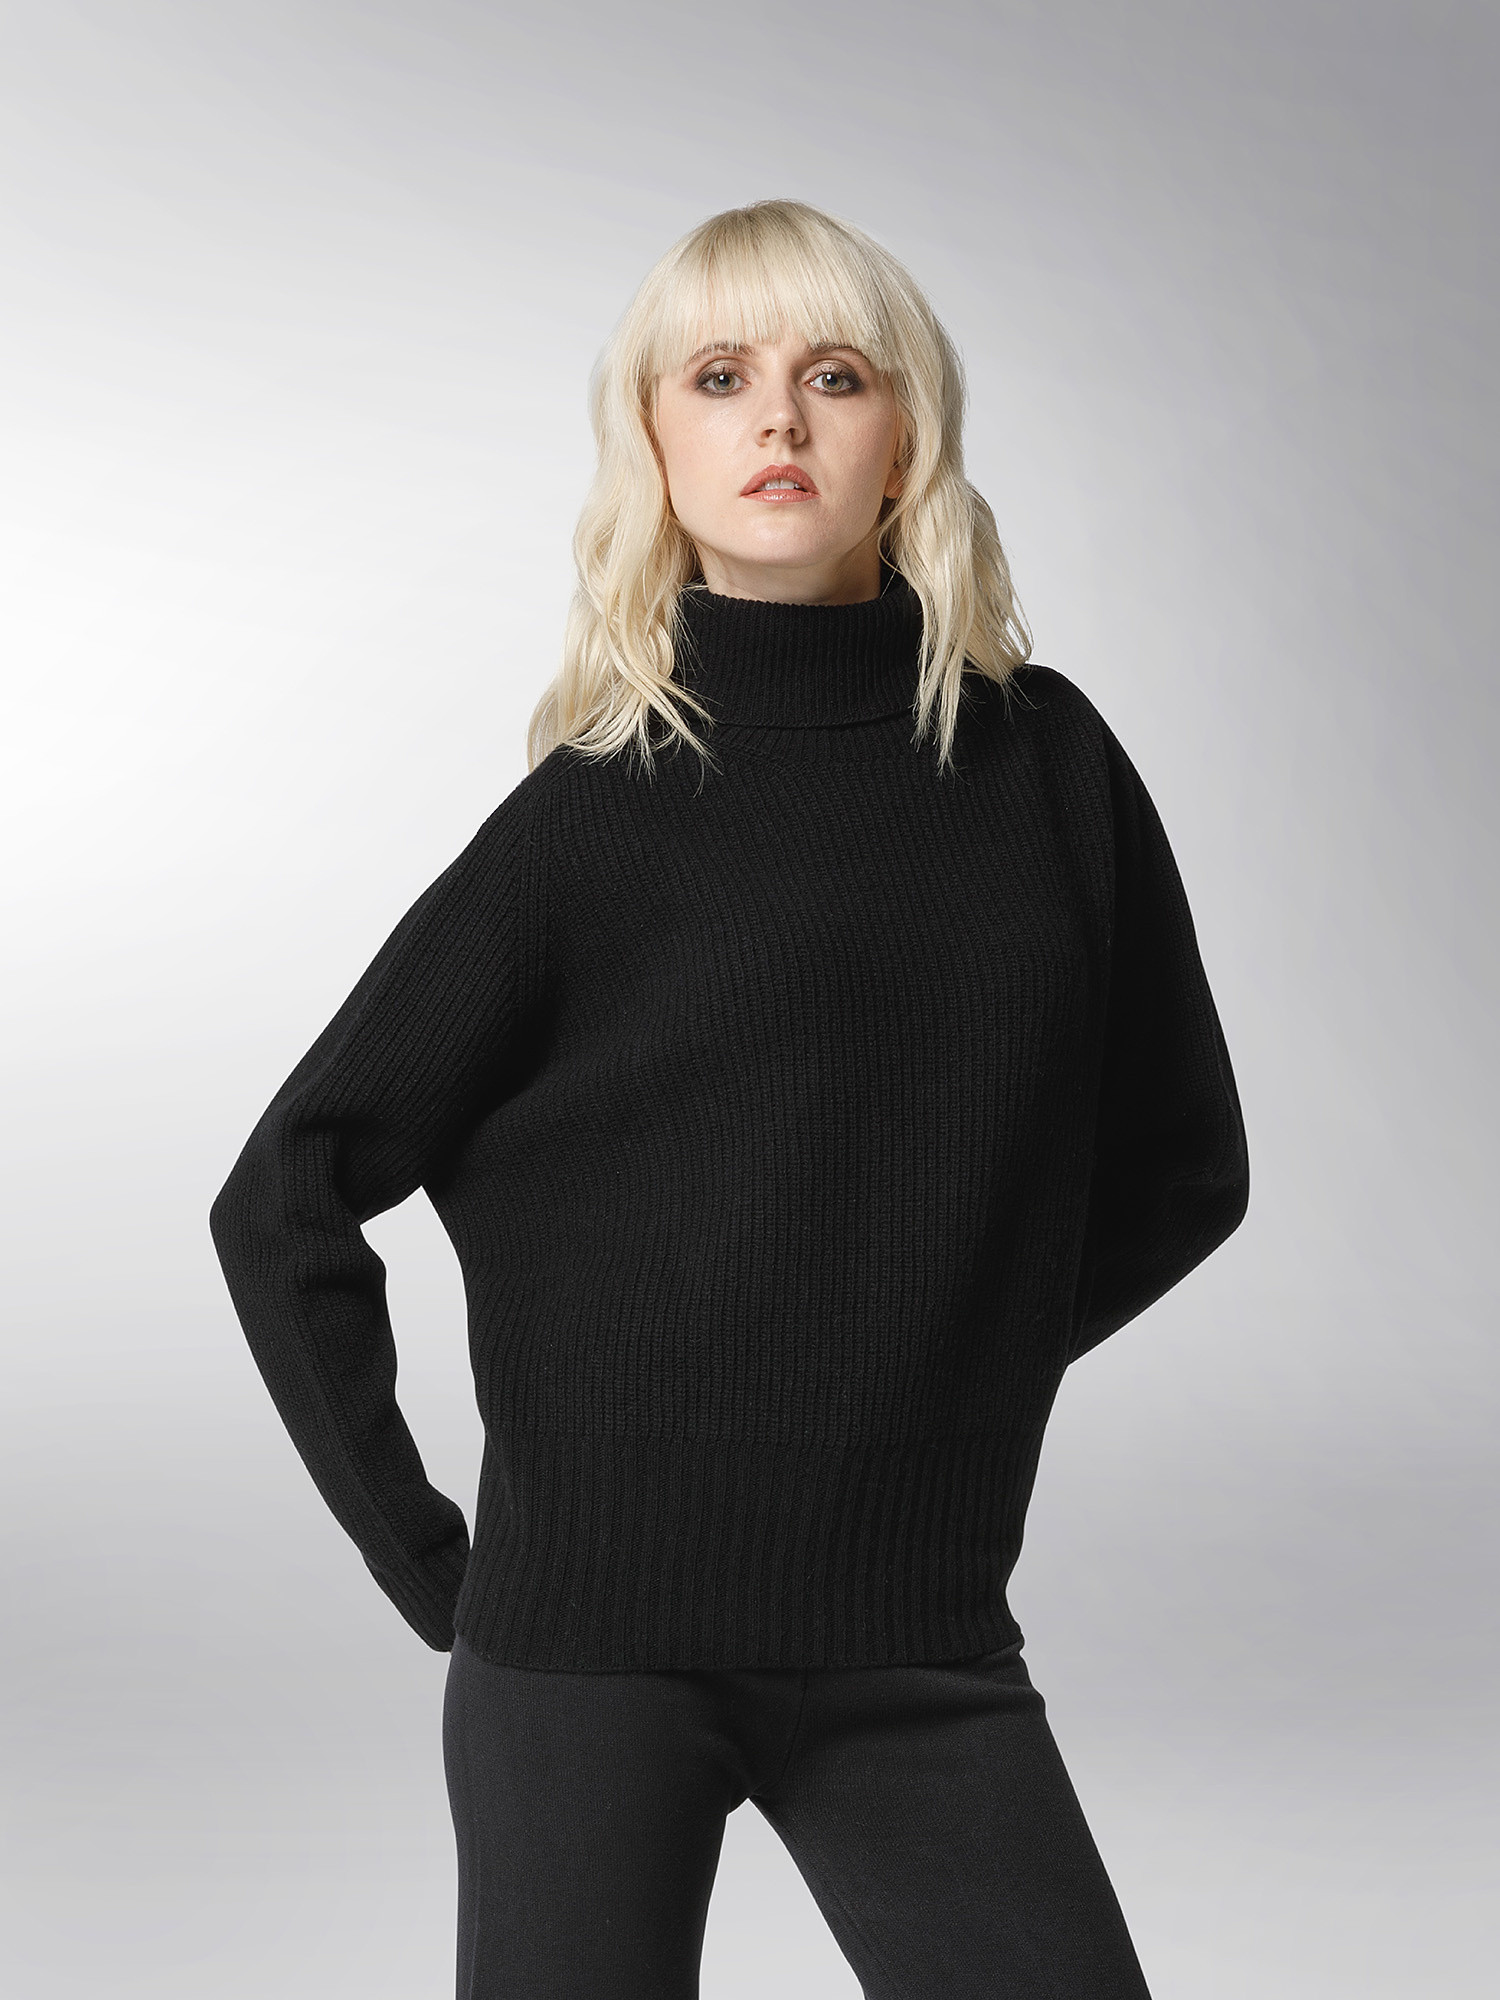 K Collection - Carded wool turtleneck pullover, Black, large image number 3